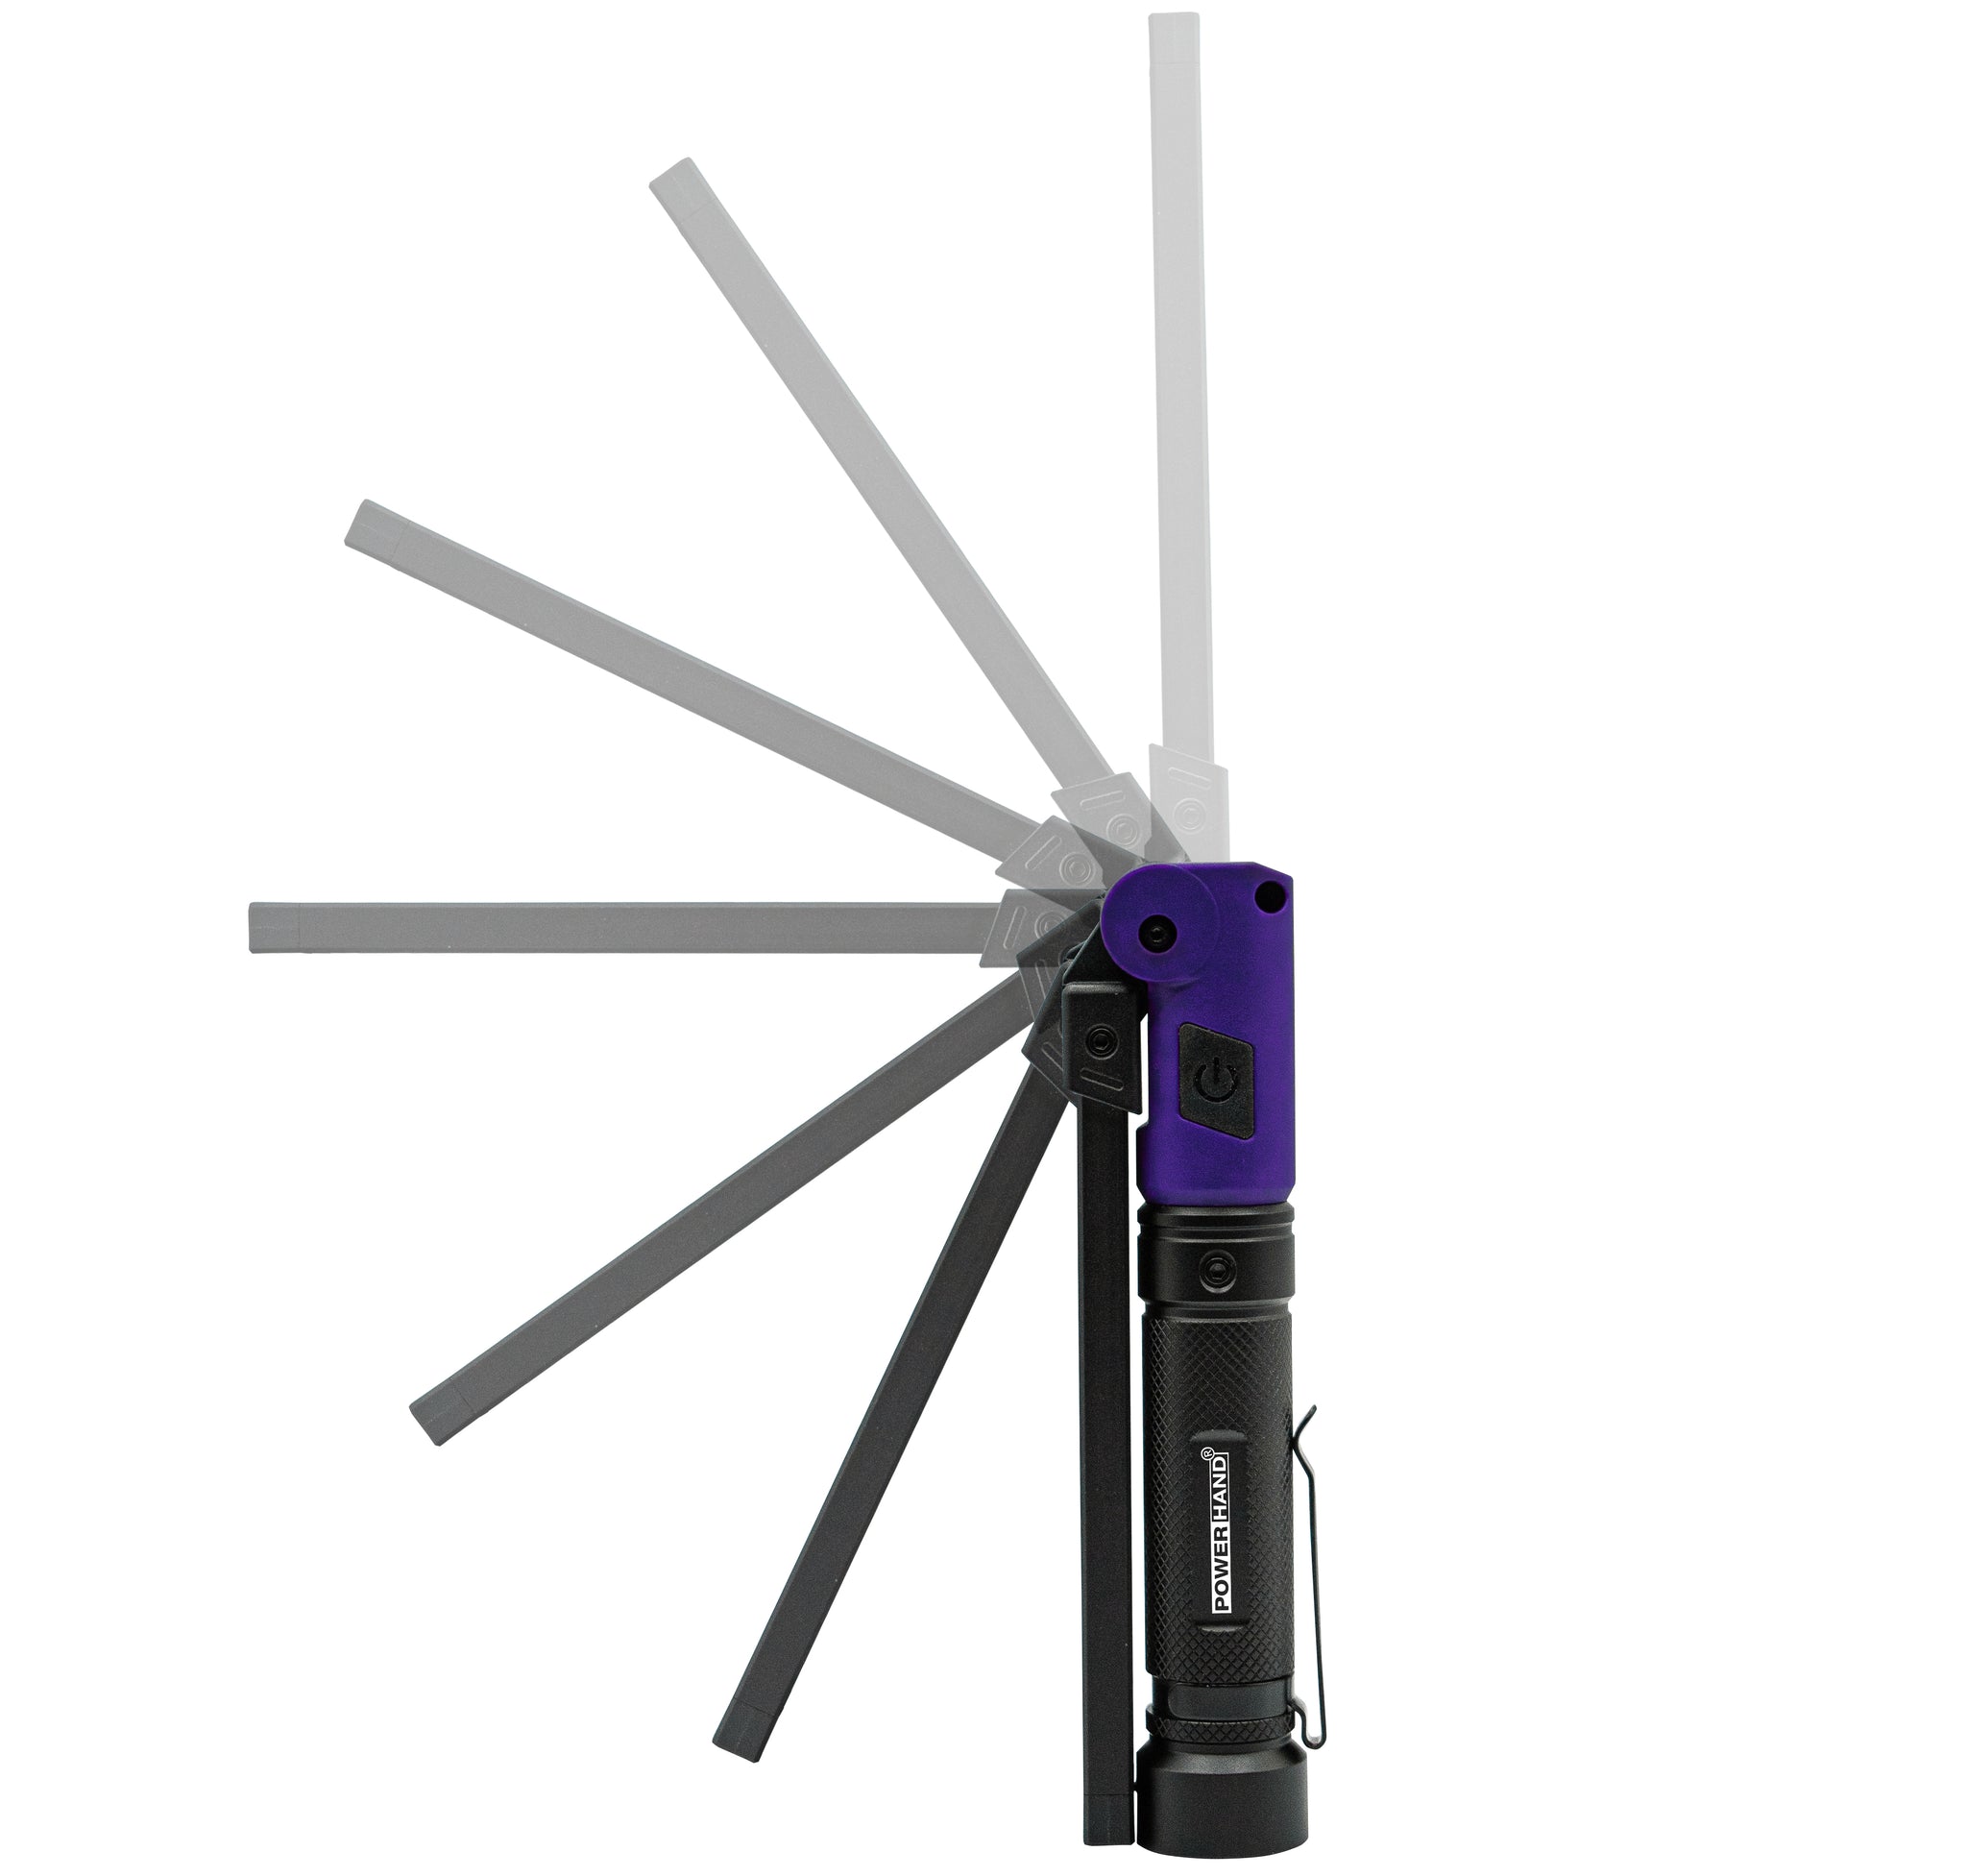 Mini torche orientable TECHMAN - Achetezachato